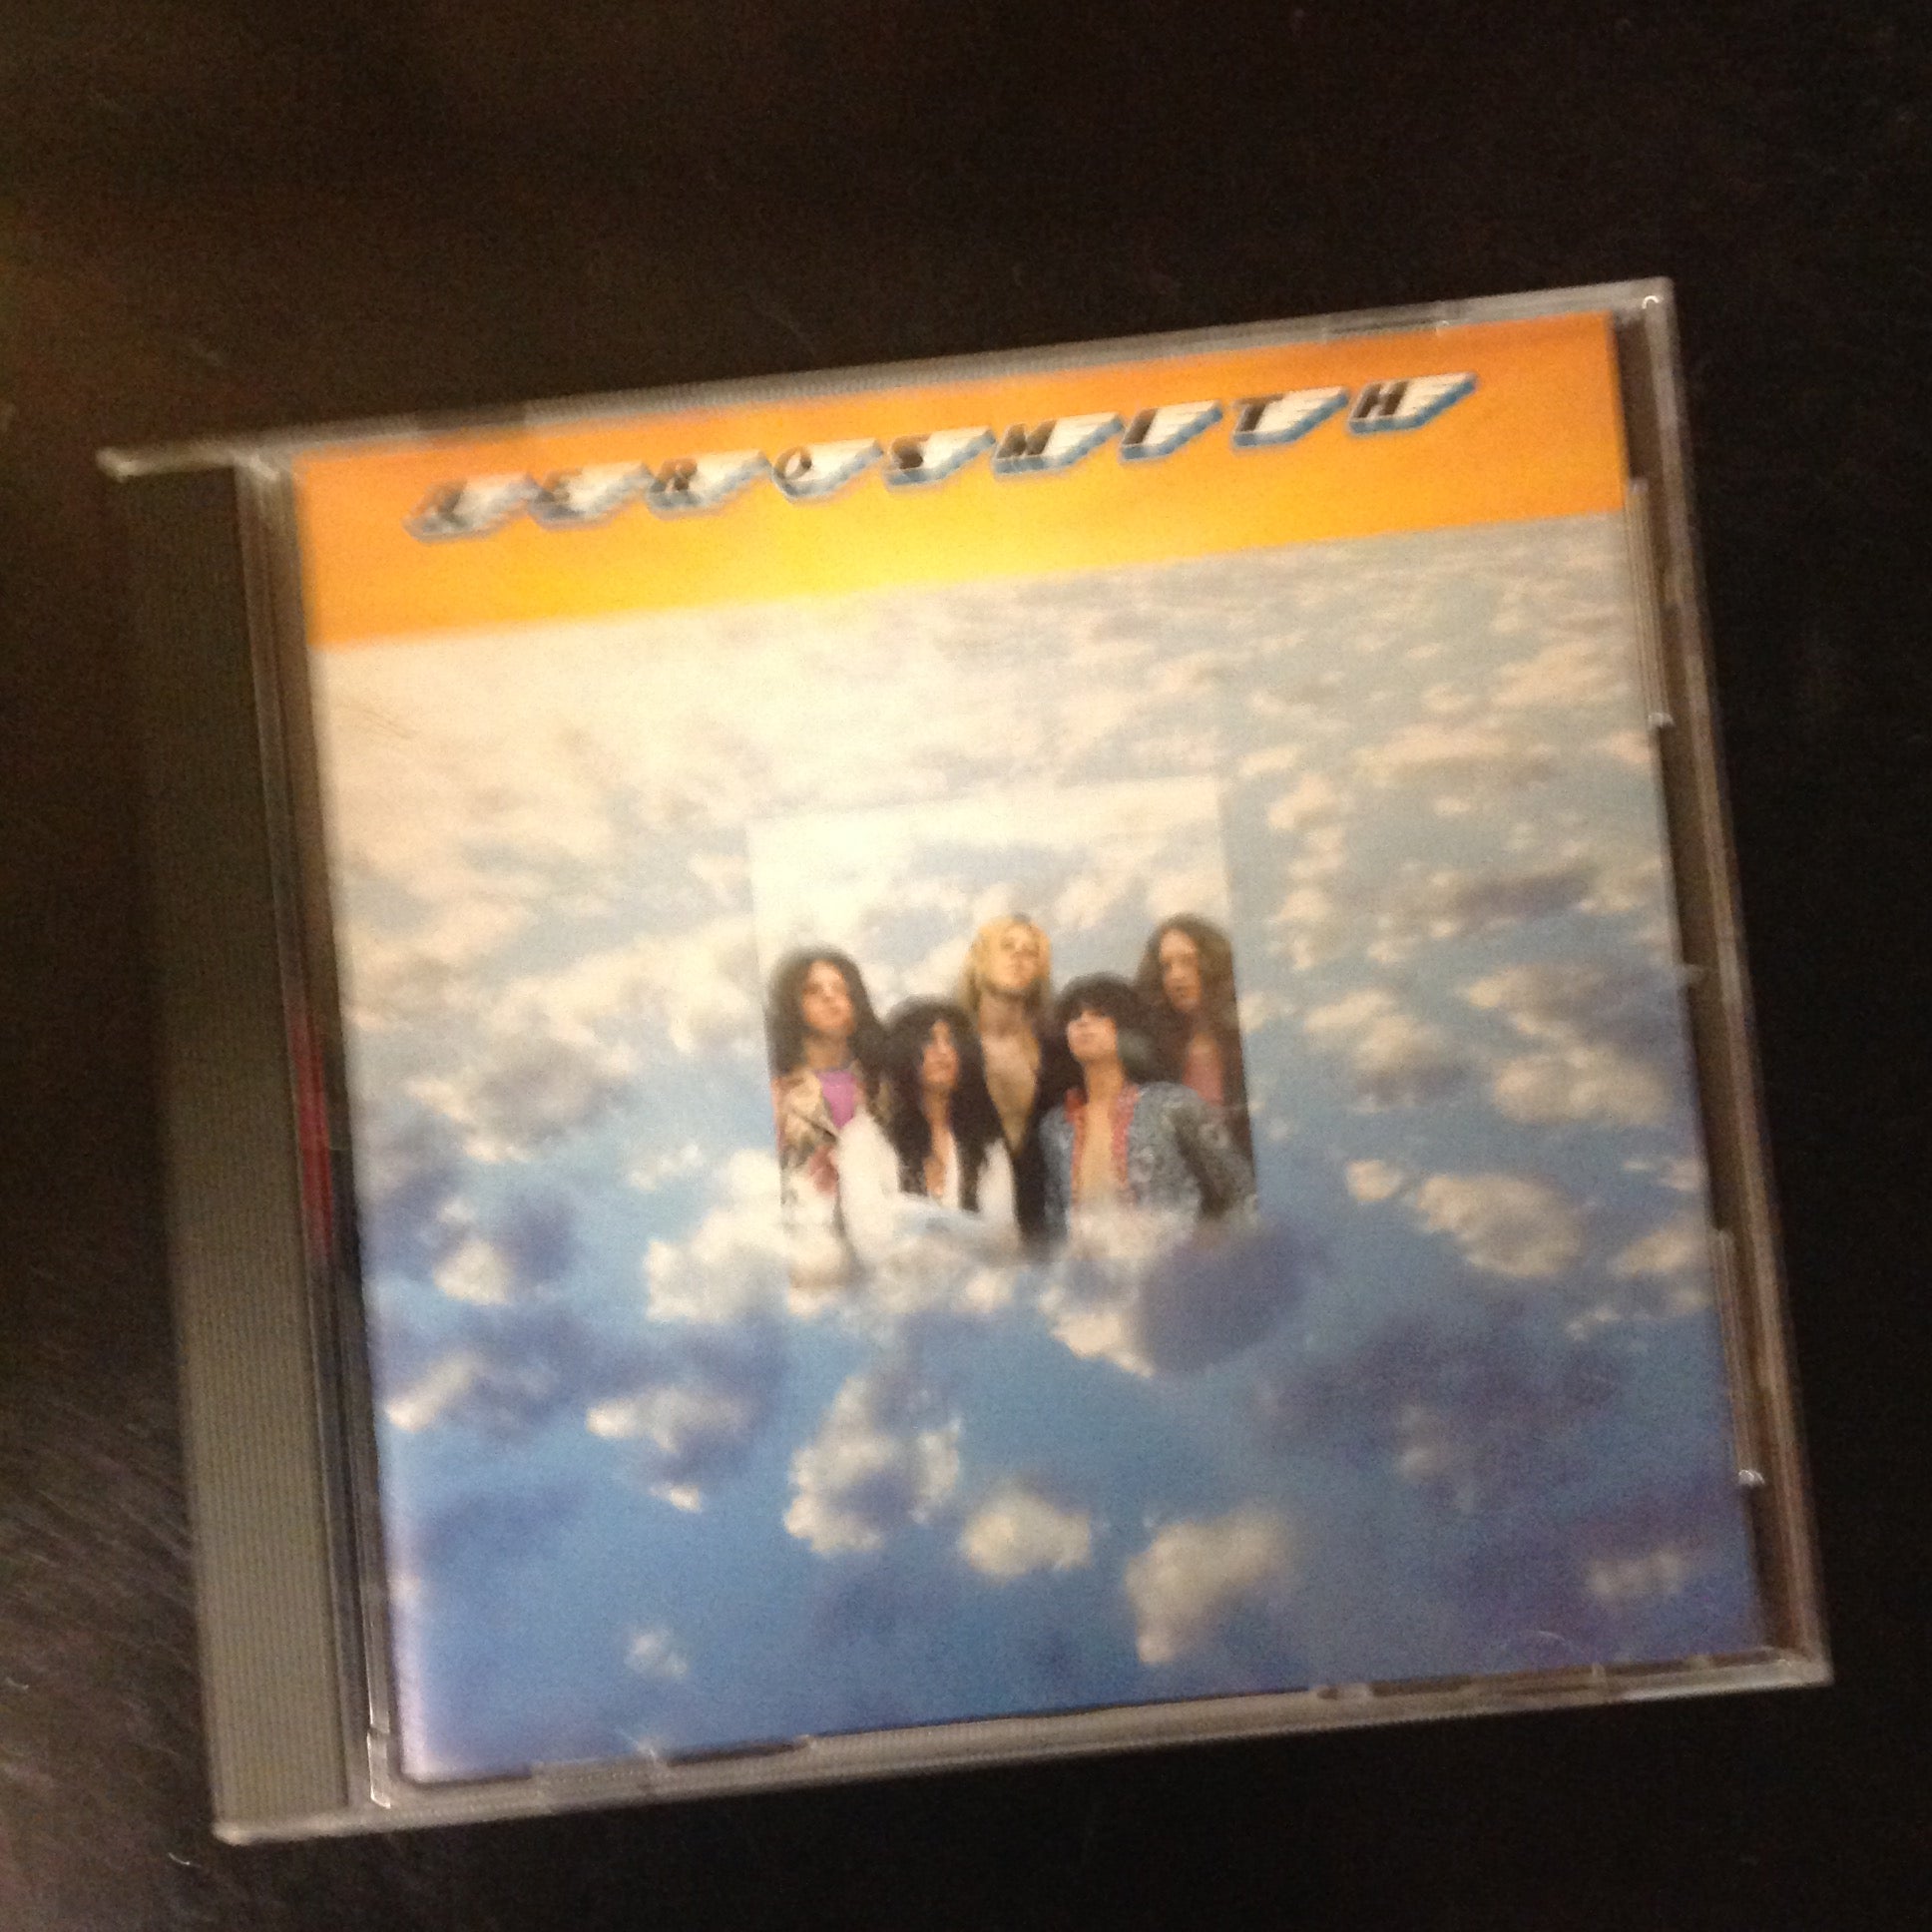 CD Aerosmith Self Titled CK57360 Columbia Rock N Roll Arena